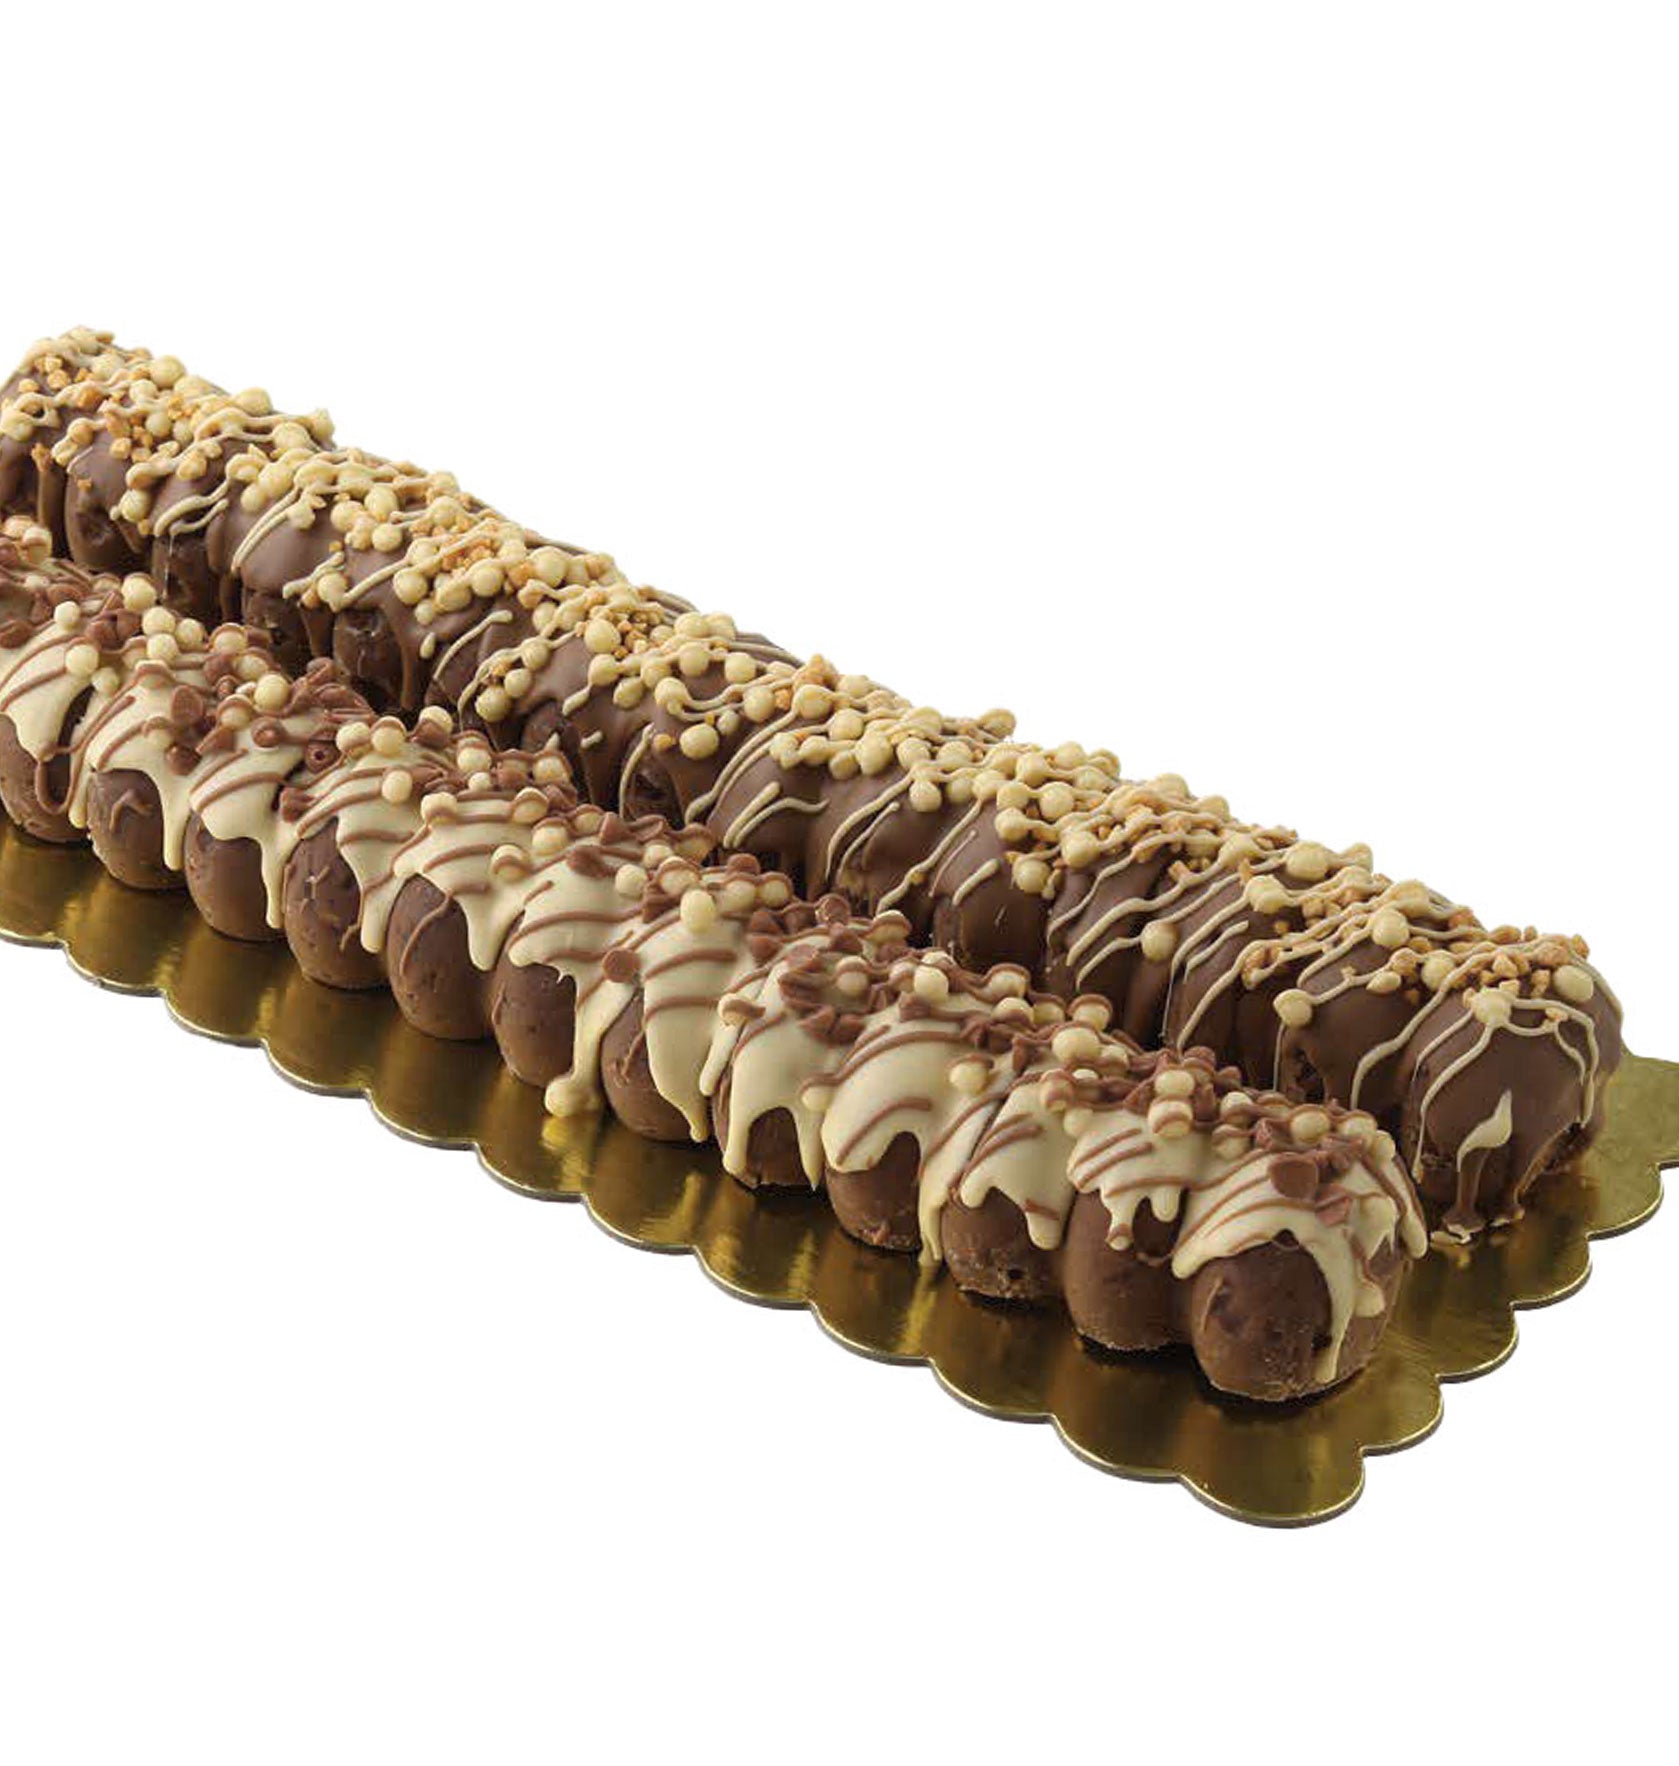 Chocolate Spiral Logs